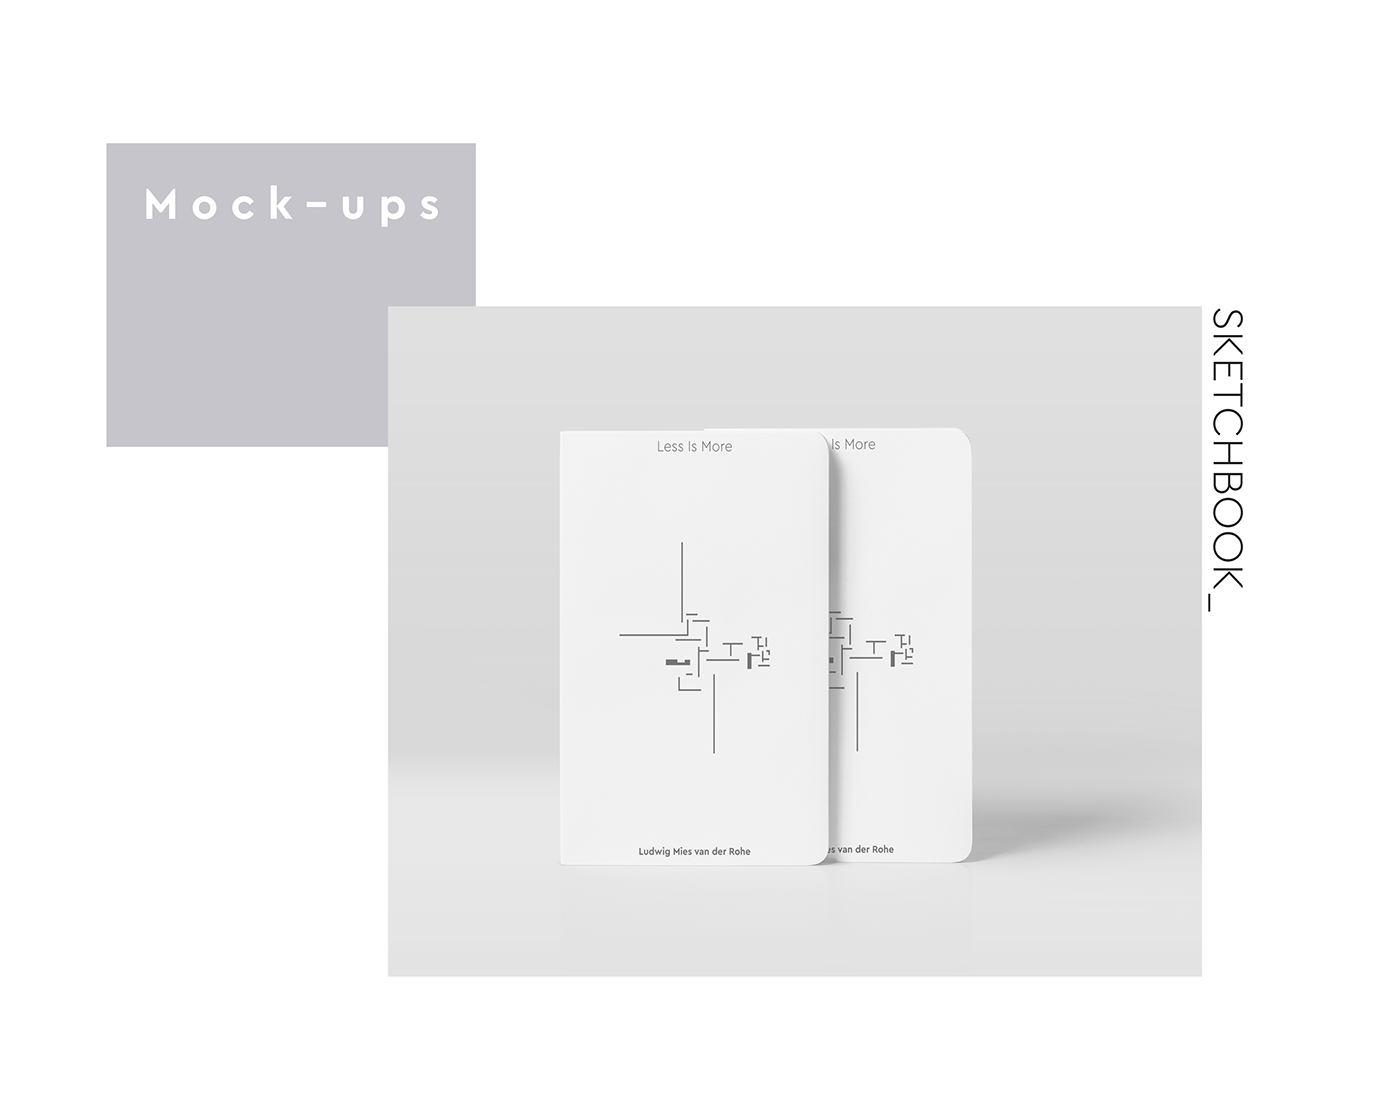 Mies Van Der Rohe ludwig minimalist less is more Visual Merchandising